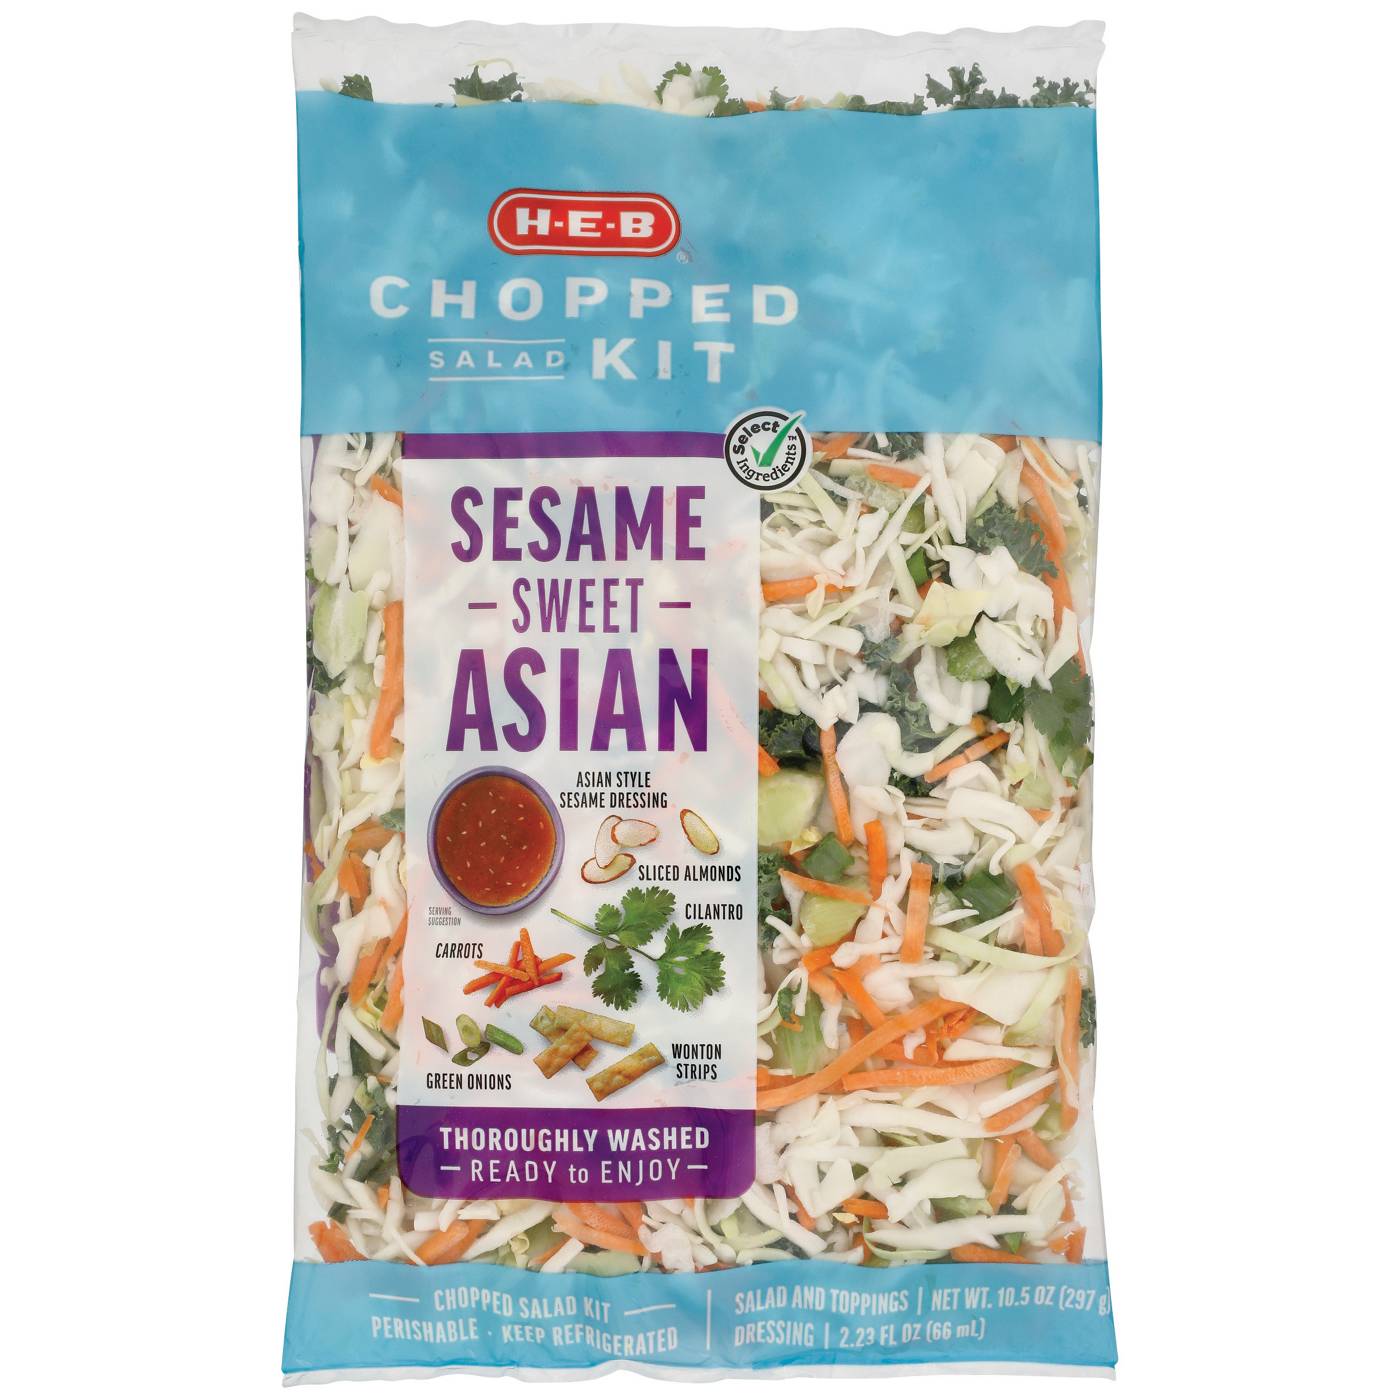 H-E-B Chopped Salad Kit - Sesame Sweet Asian; image 1 of 5